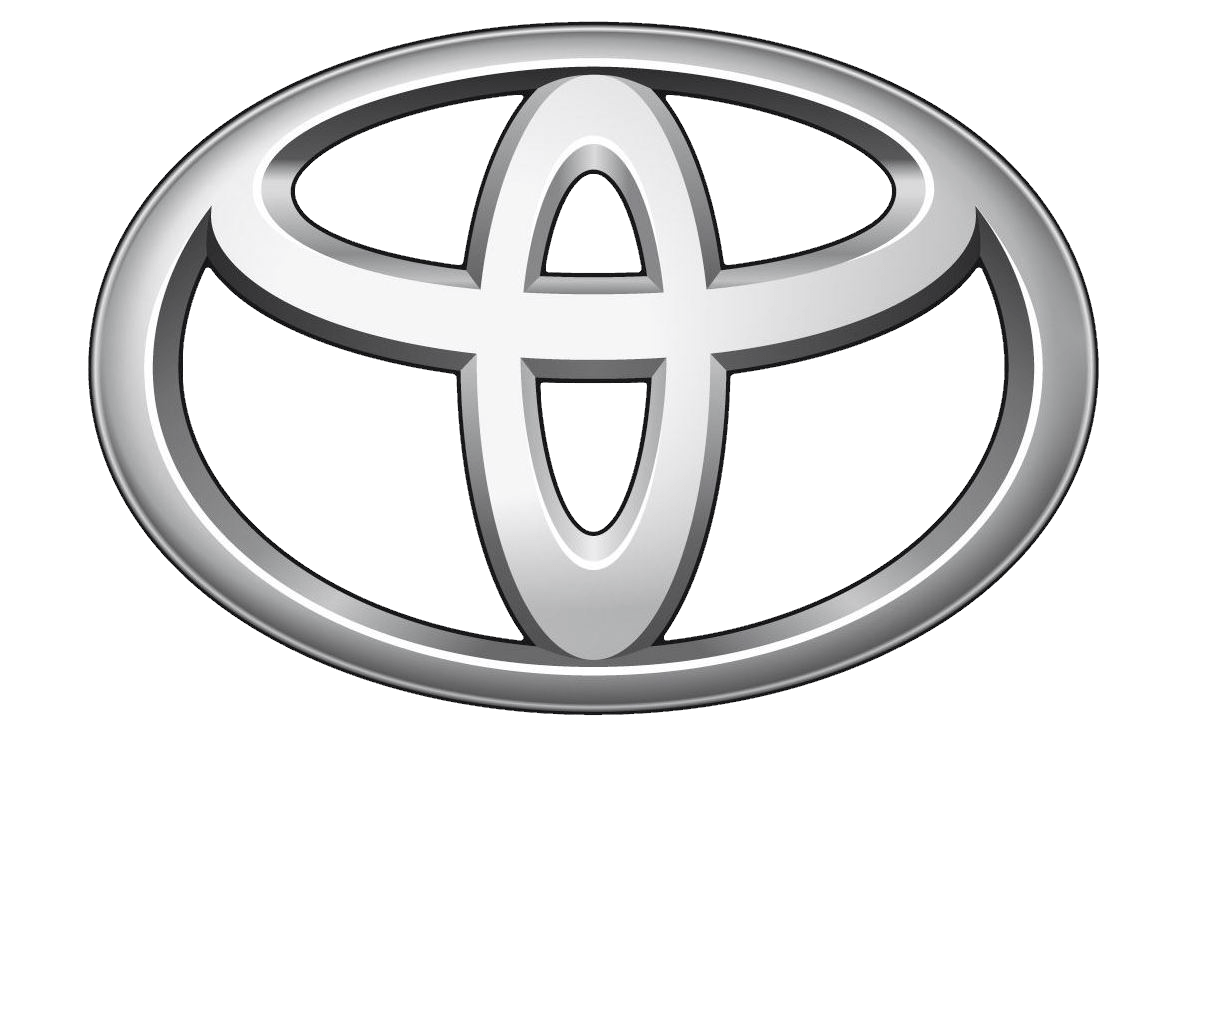 Toyota Car Logo - Toyota Car Logo PNG Image - PurePNG | Free transparent CC0 PNG Image ...